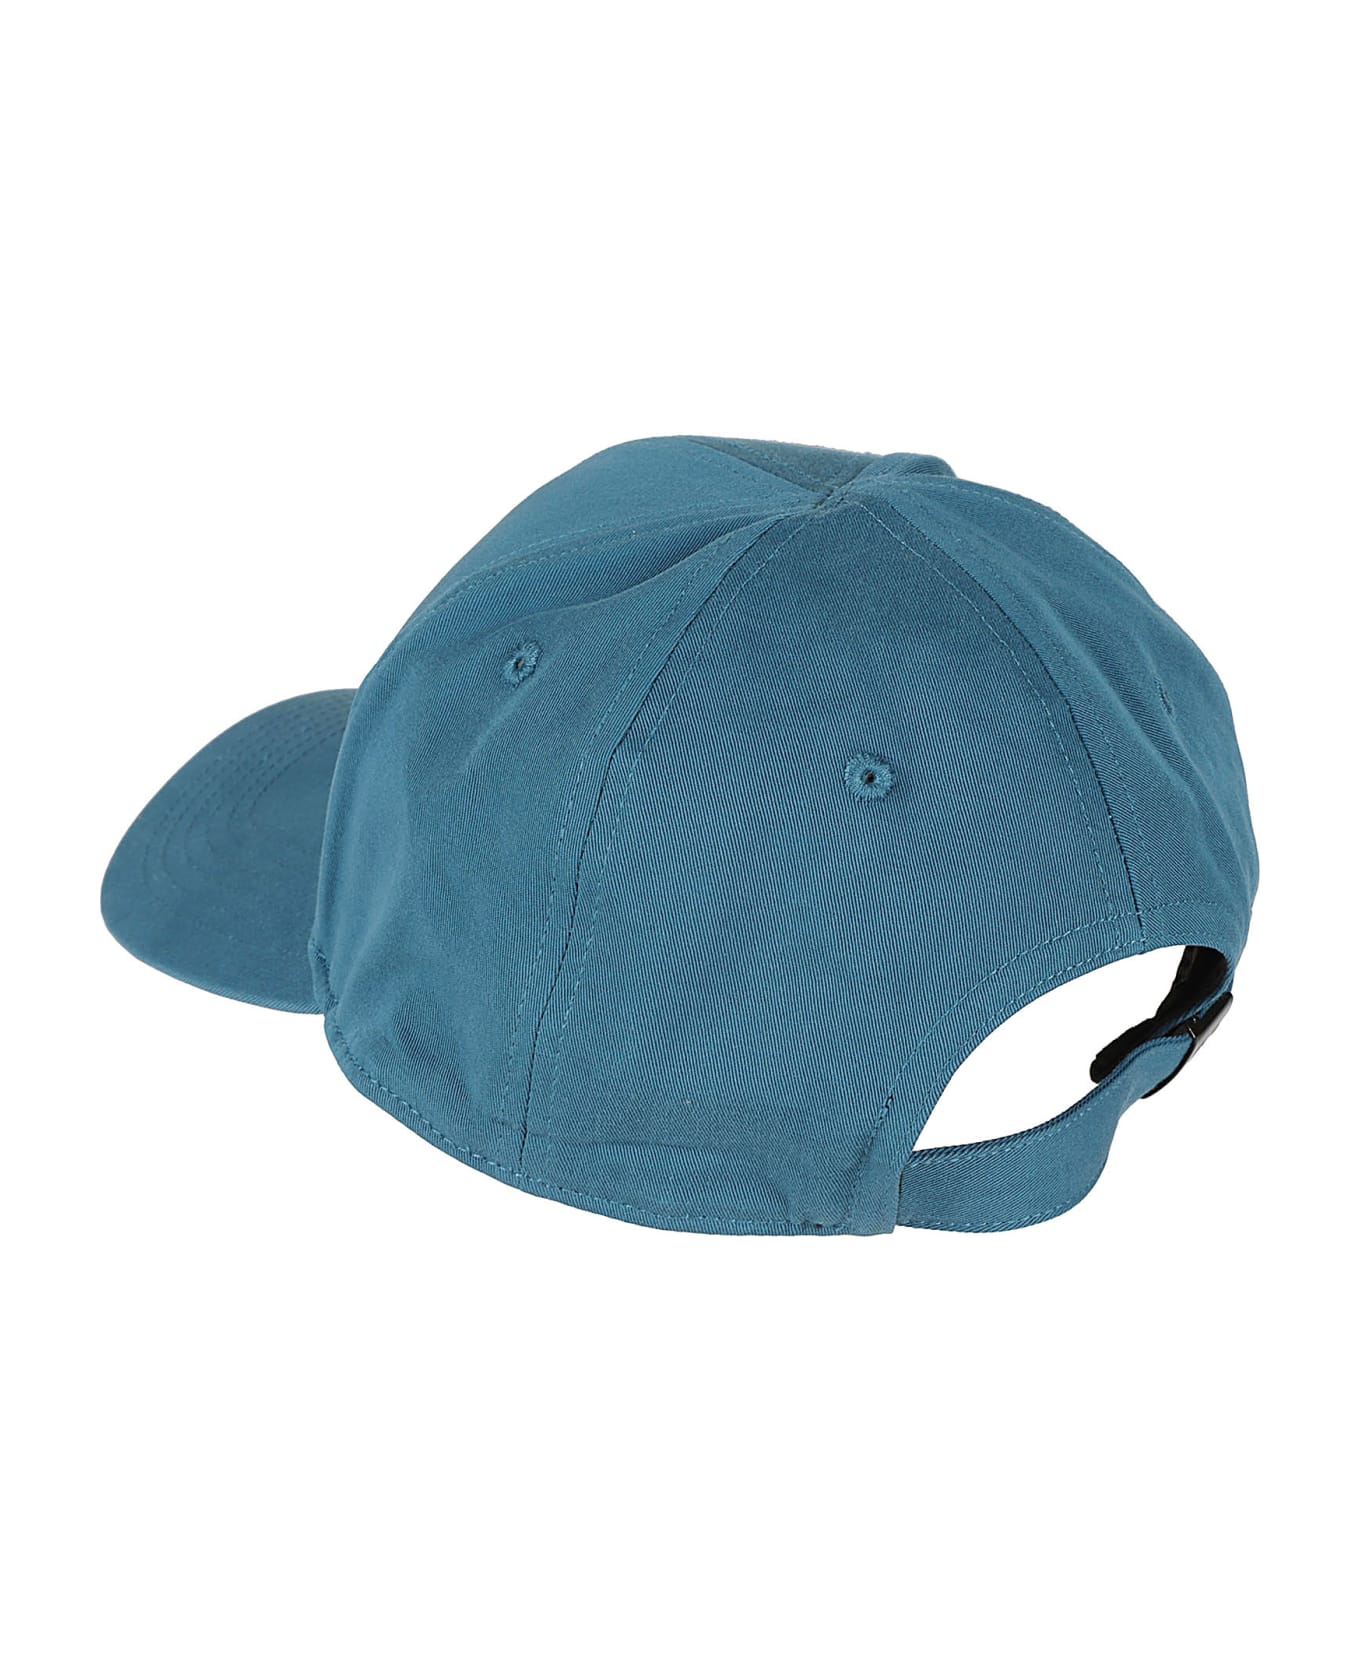 C.P. Company Gabardine Baseball Cap - INK BLUE 帽子